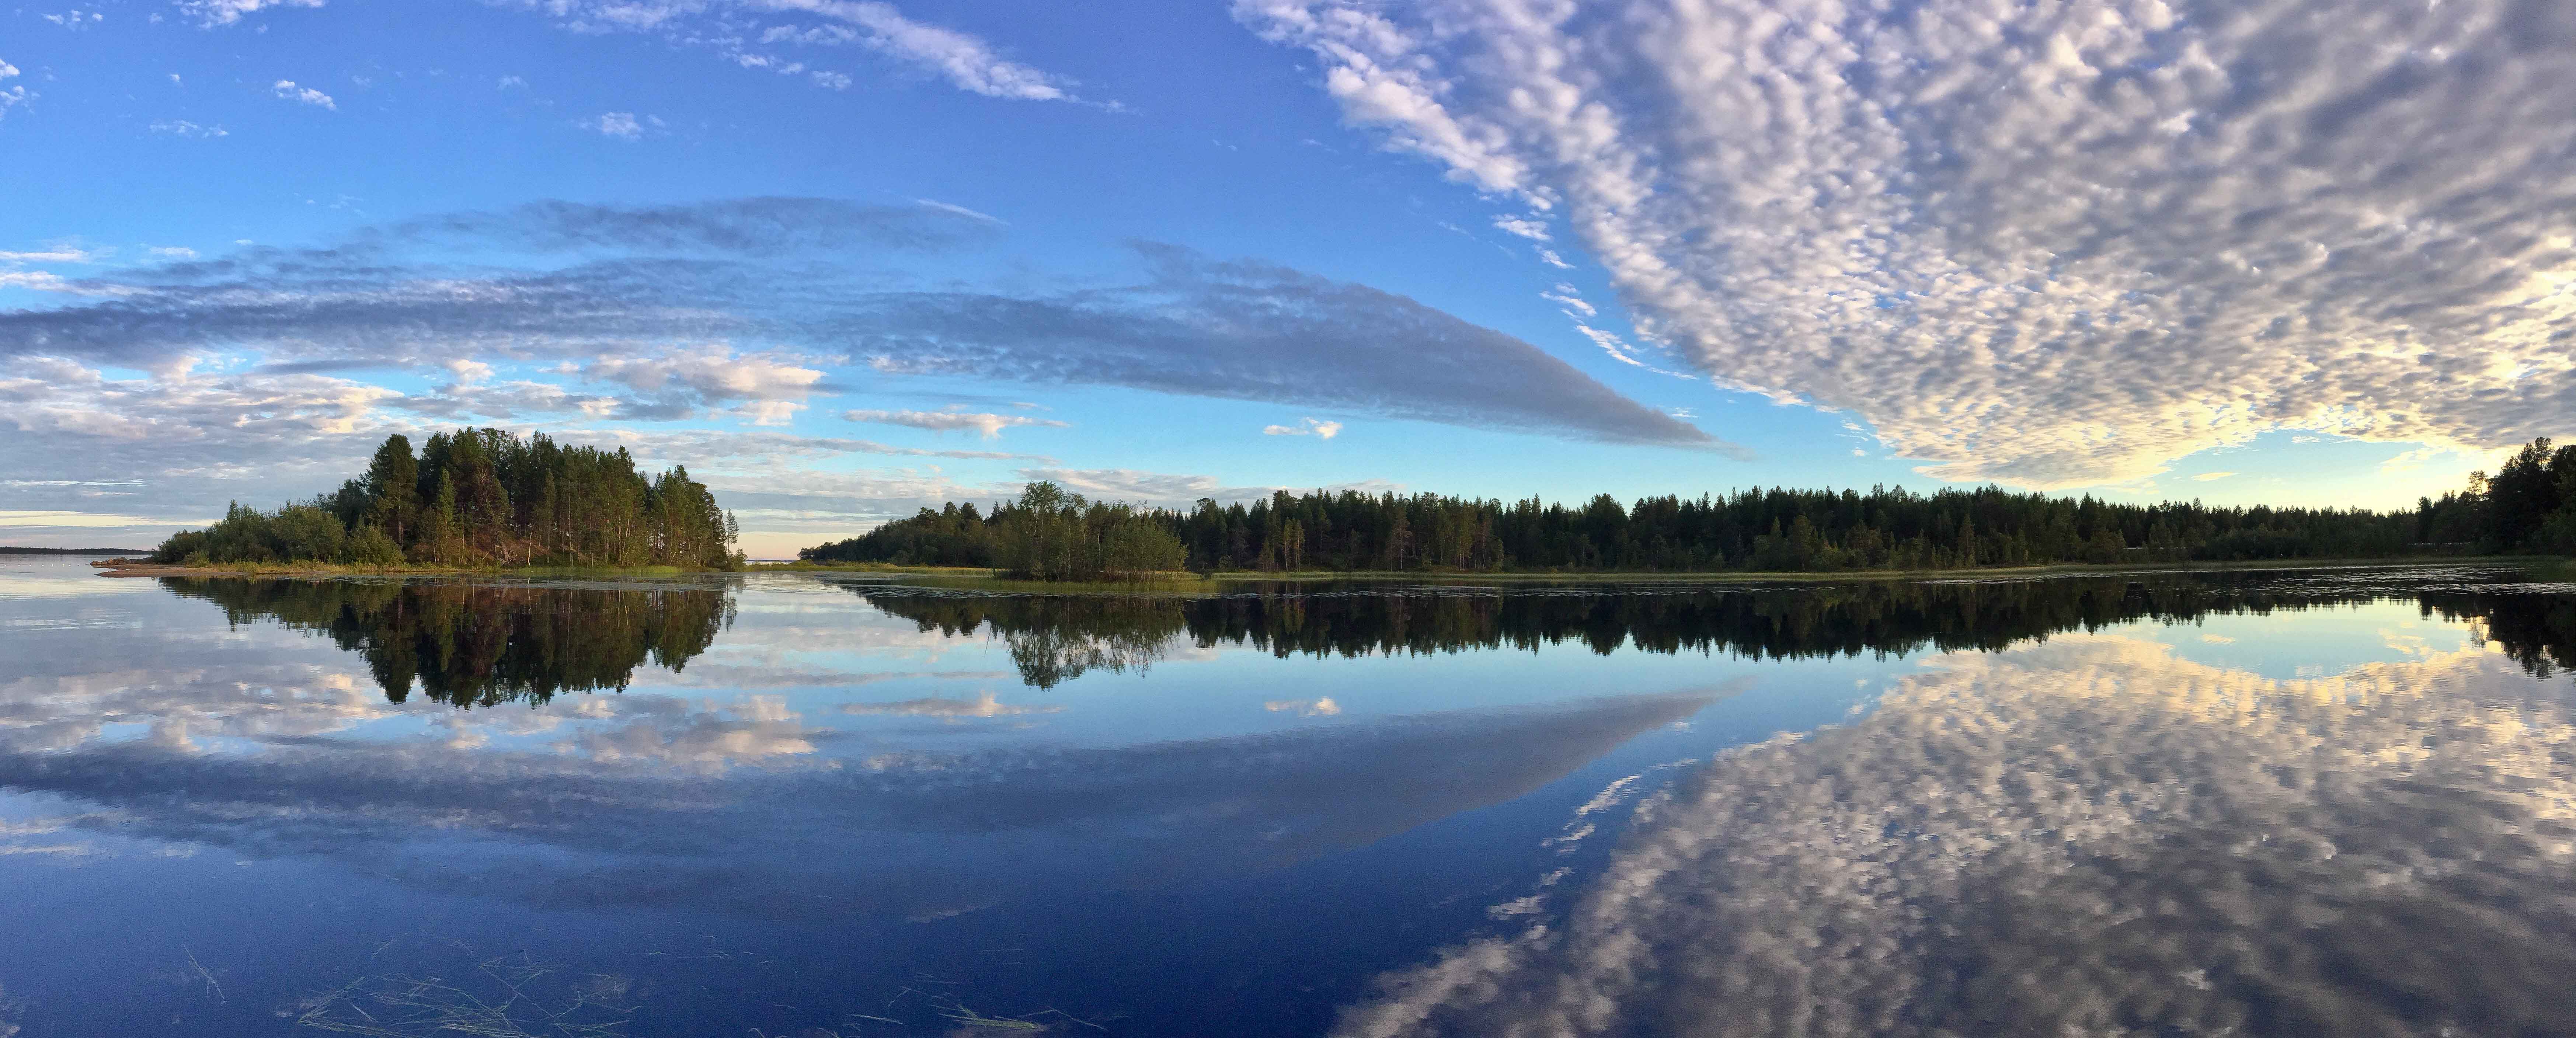 Lake Inari, Finland